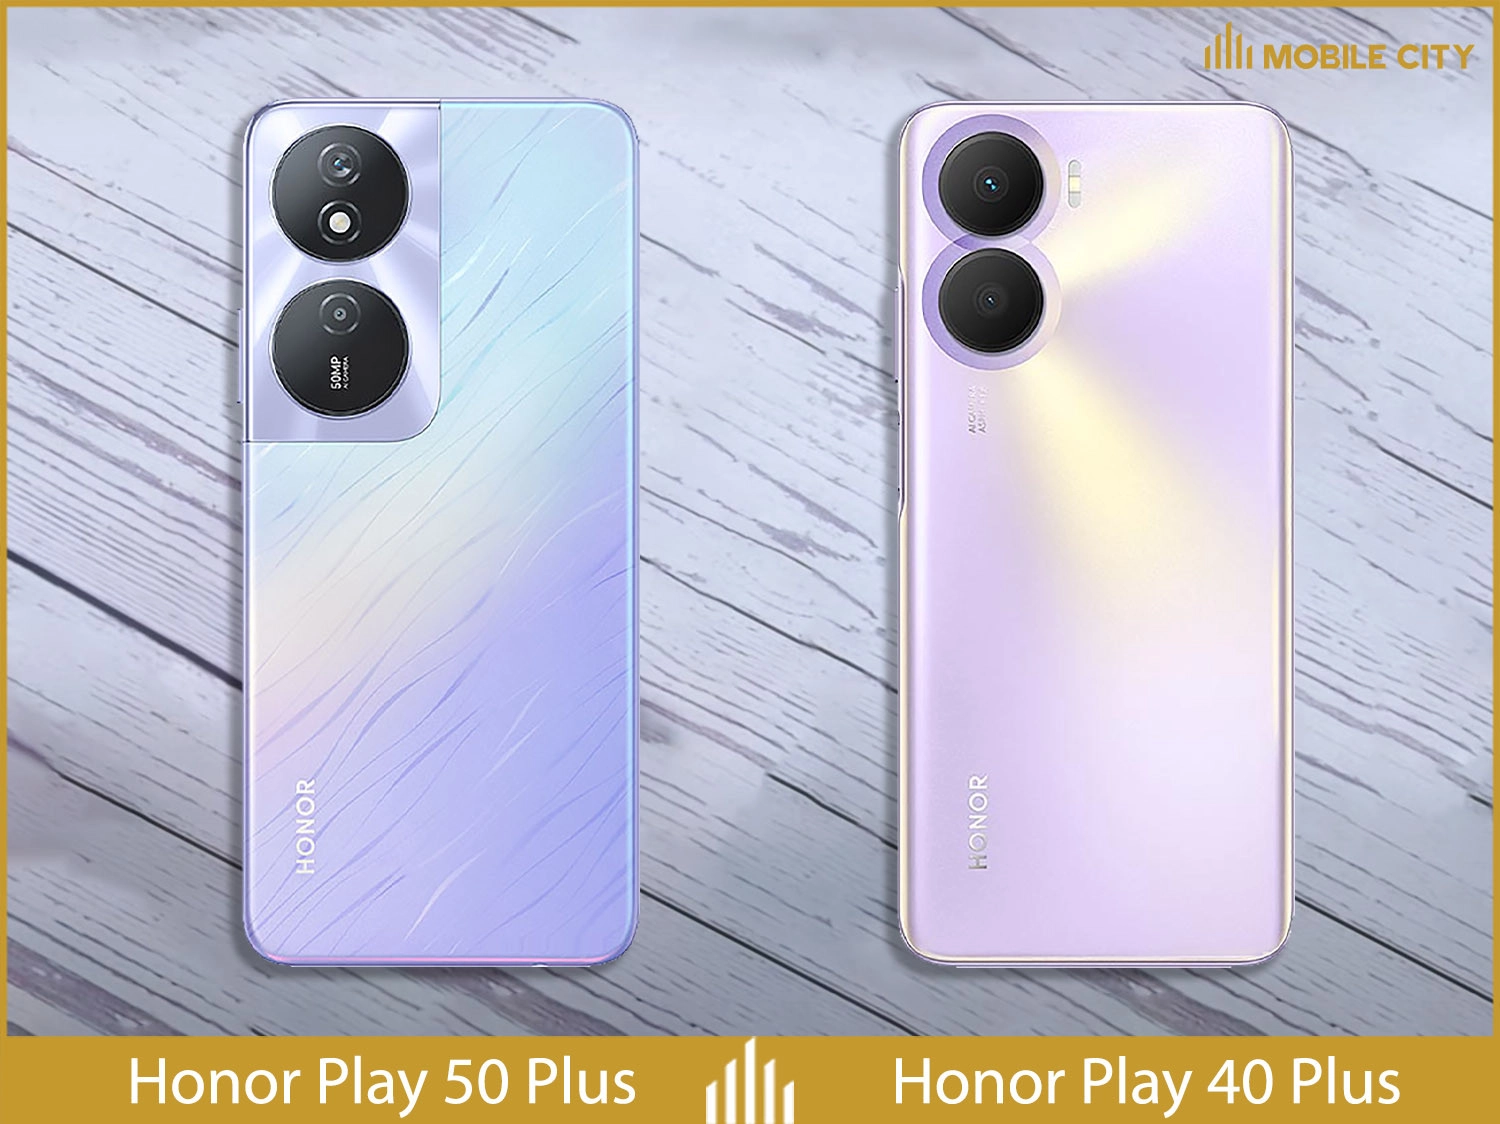 honor-play-50-plus-so-sanh-honor-play-40-plus-01